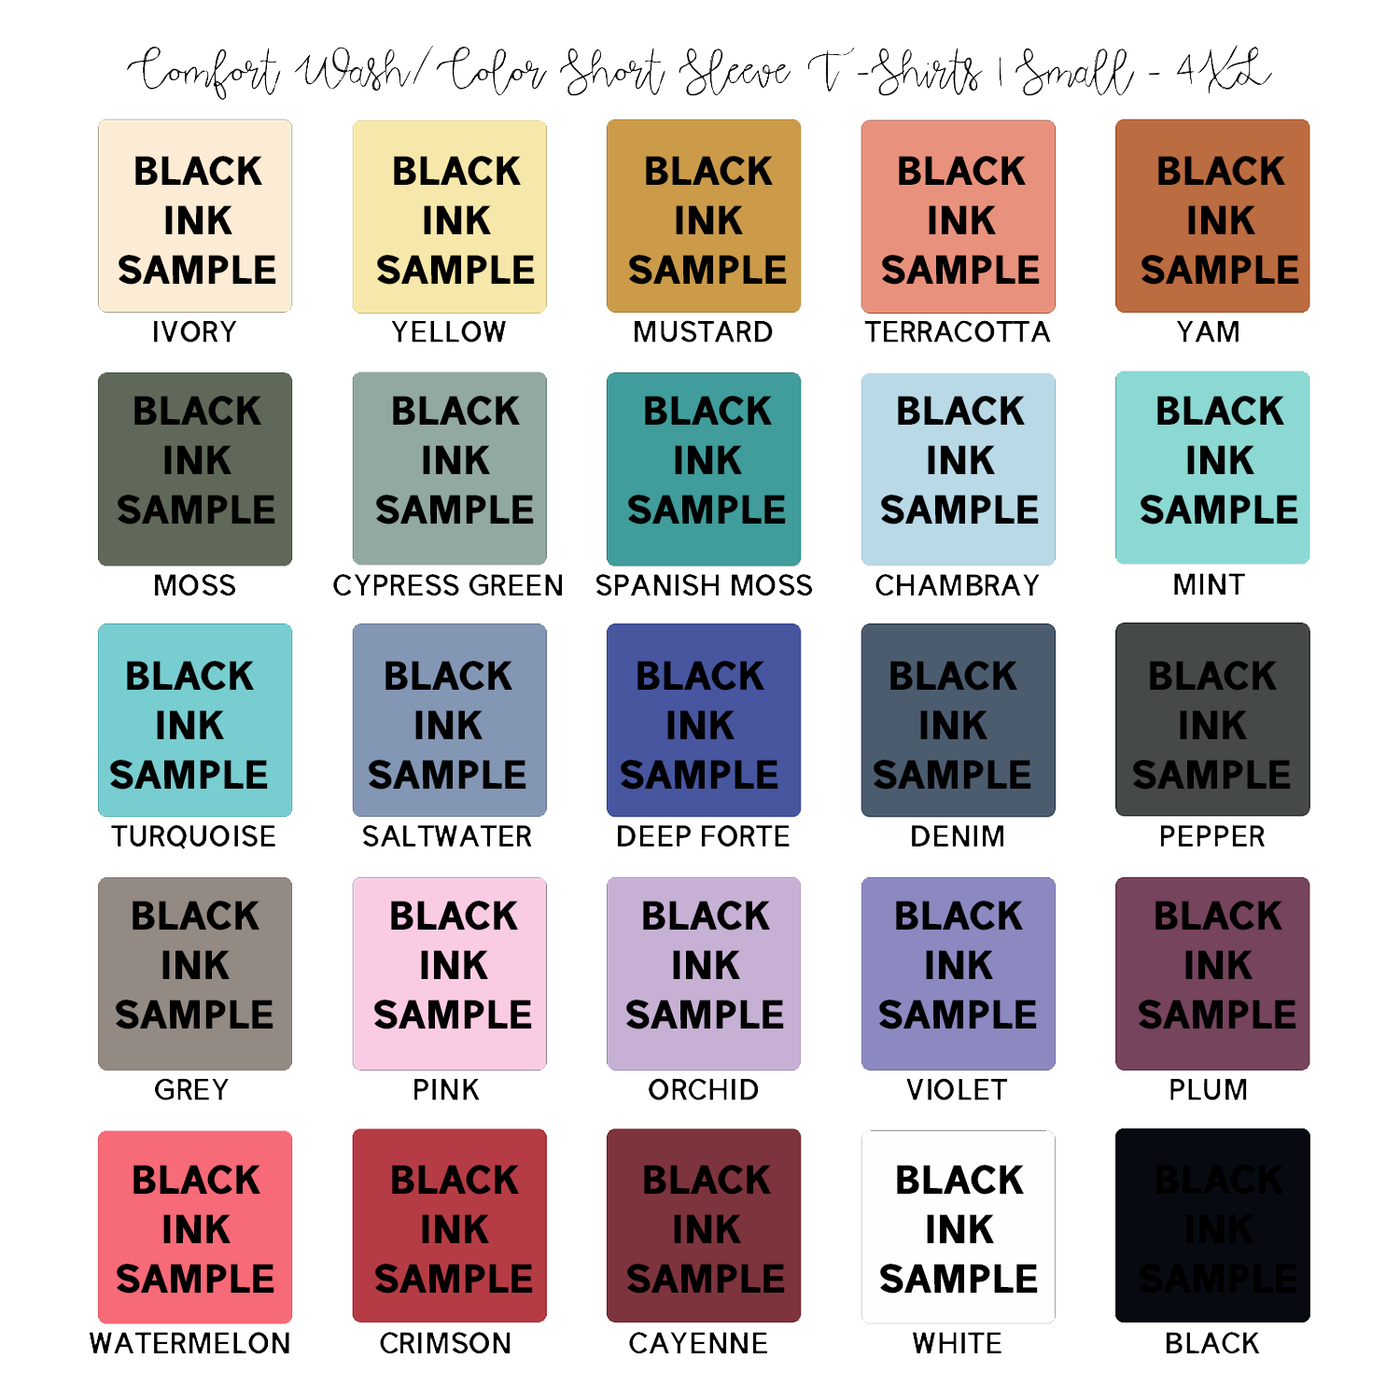 FFA Agriculture Black Ink ComfortWash/ComfortColor T-Shirt (S-4XL) - Multiple Colors!